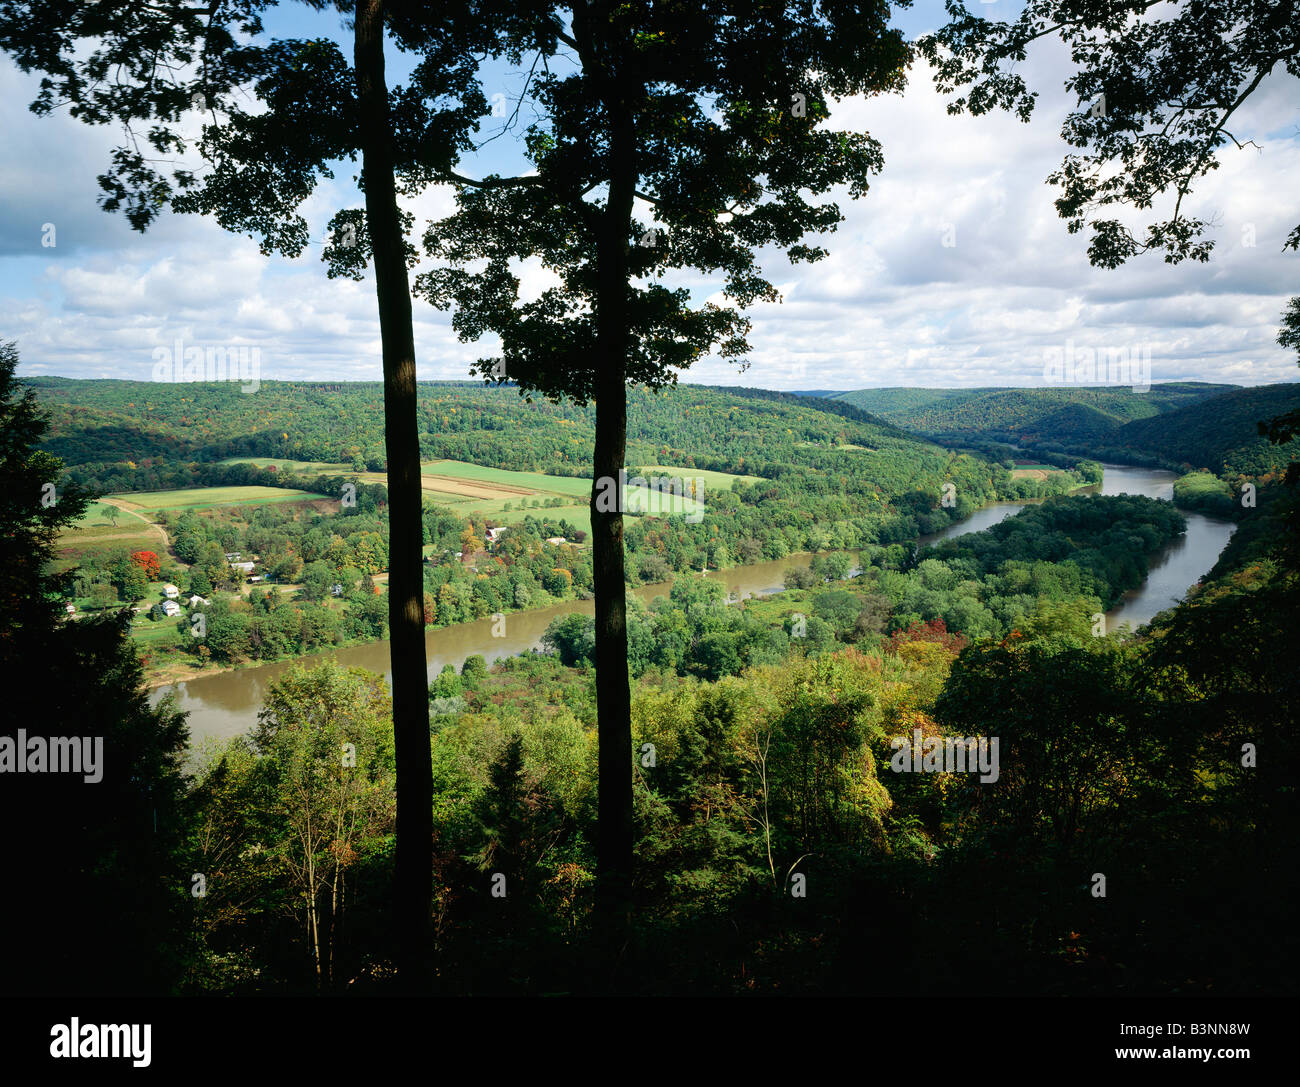 SOMMER-ANSICHT DES ALLEGHENY RIVER & COURSEN INSEL, ALLEGHENY NATIONAL FOREST; 500.000 HEKTAR, PENNSYLVANIA, USA Stockfoto